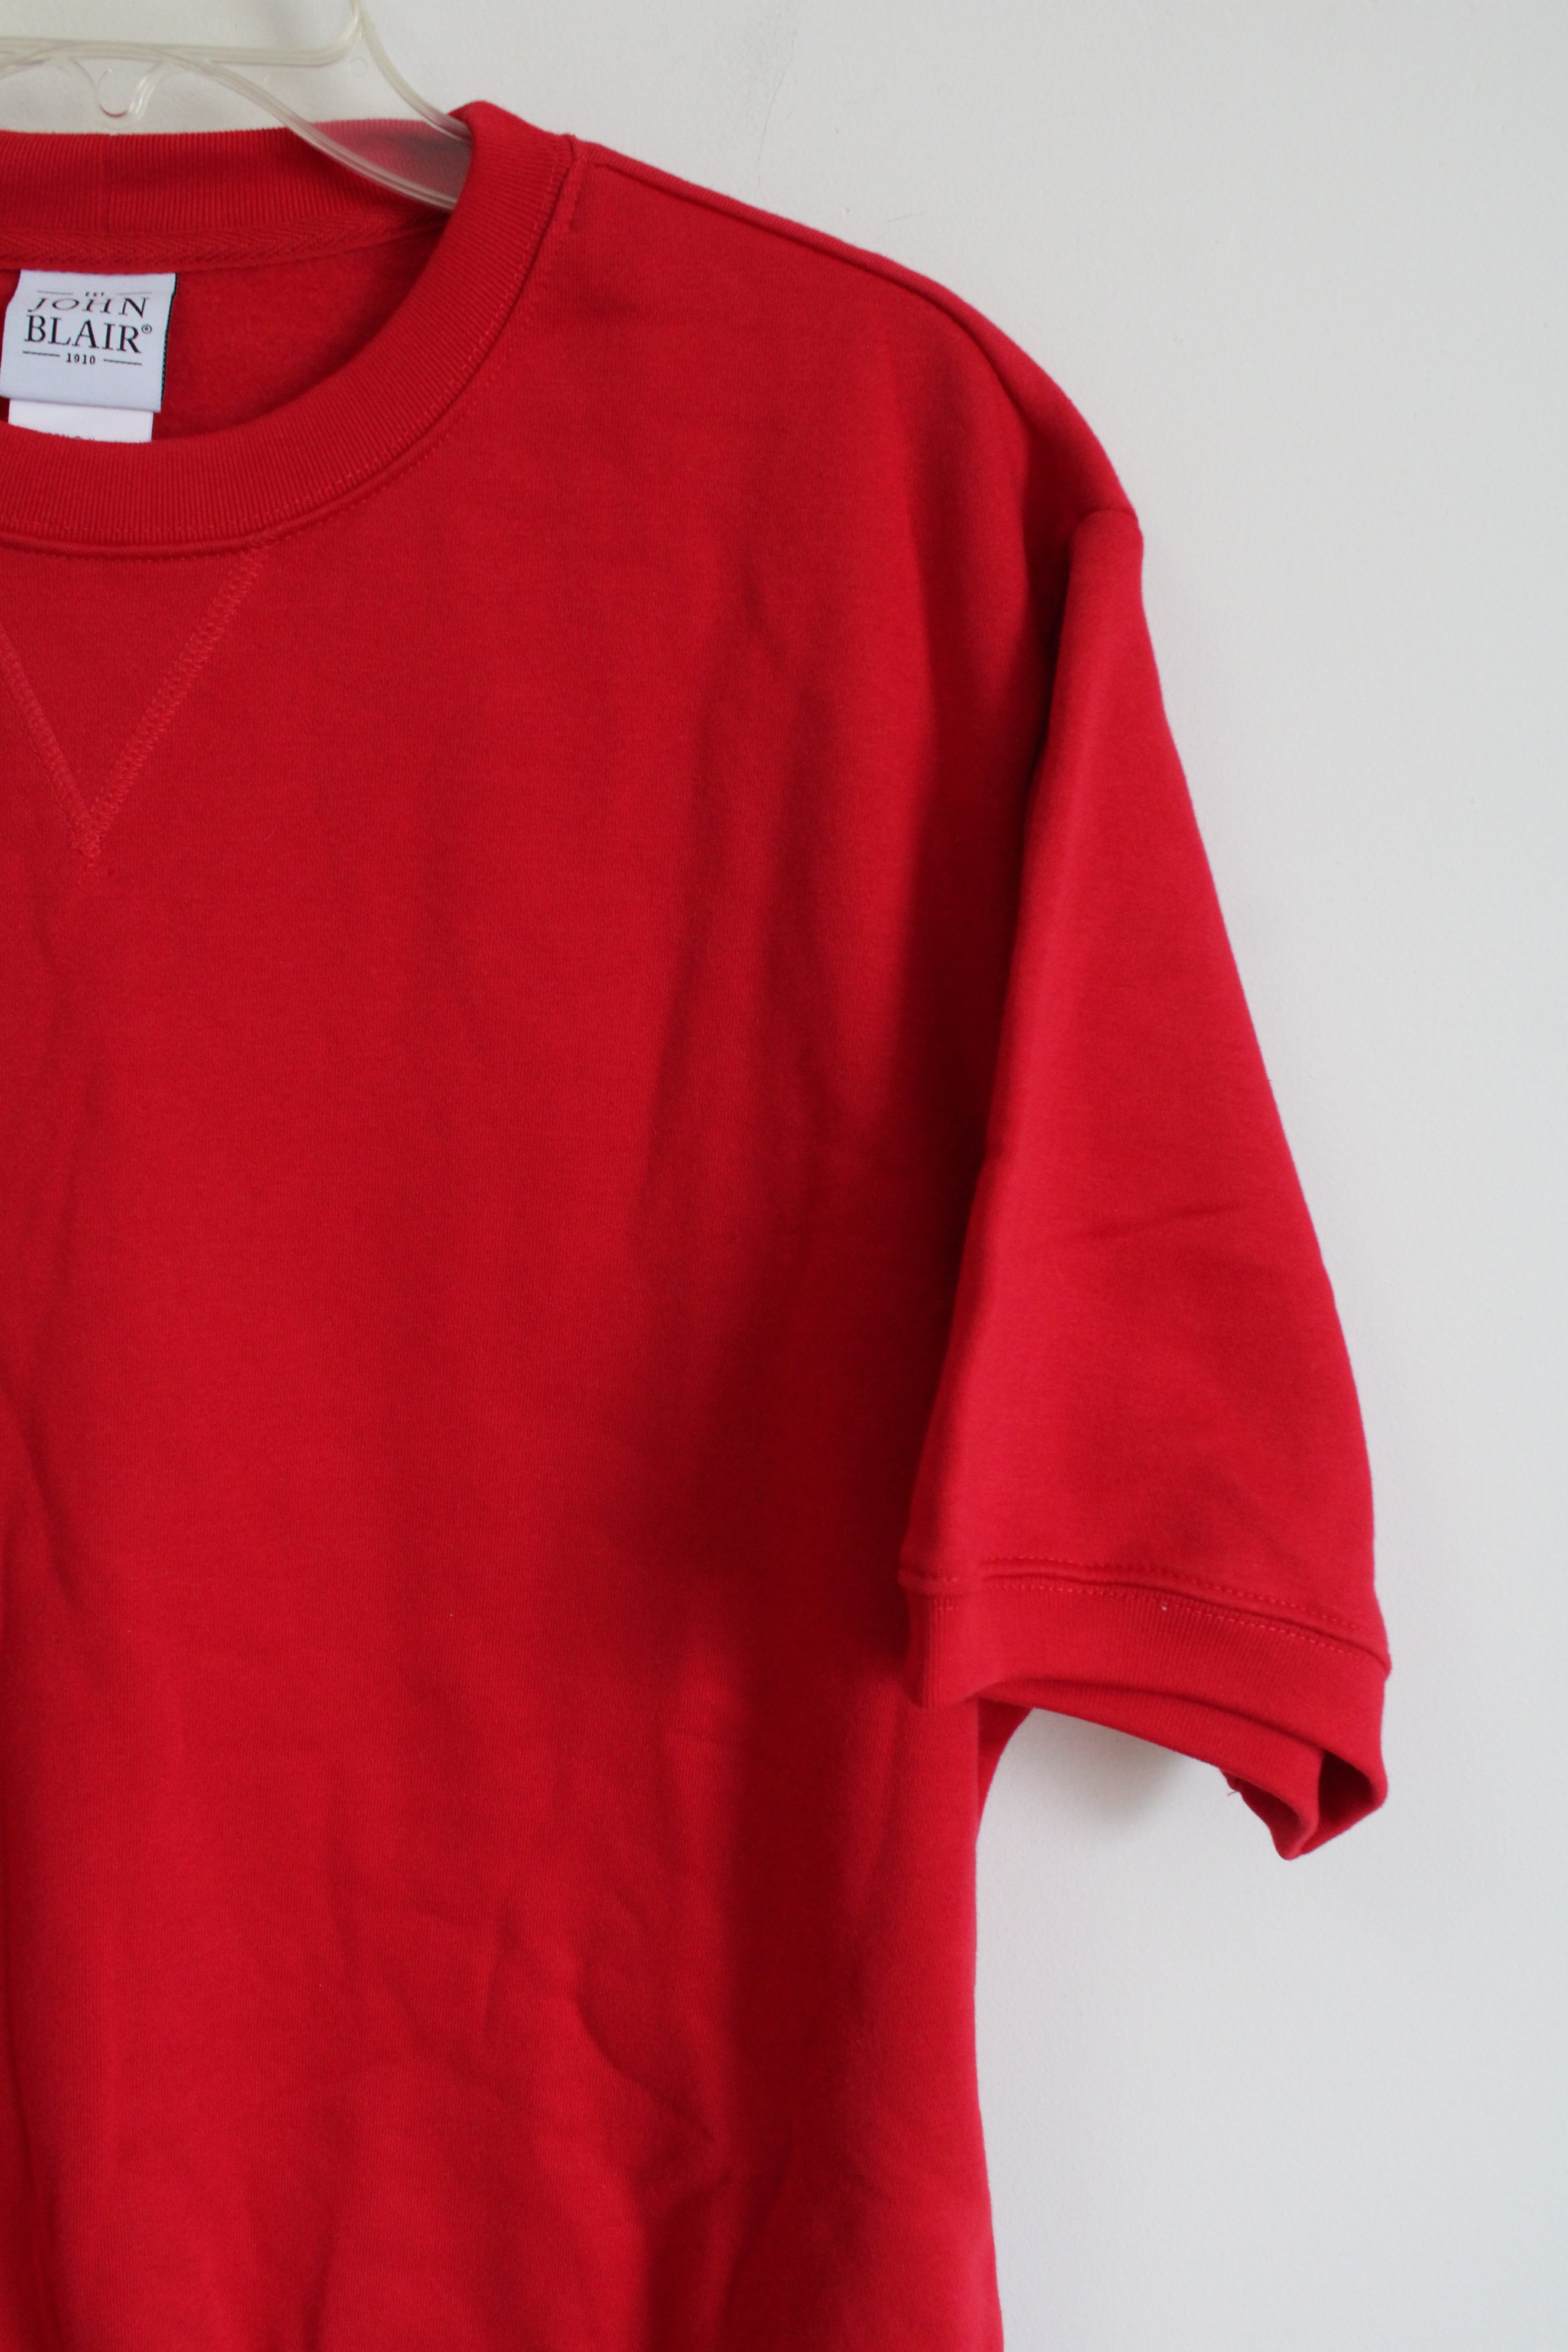 John Blair Red Fleece Lined Short Sleeved Sweatshirt | L